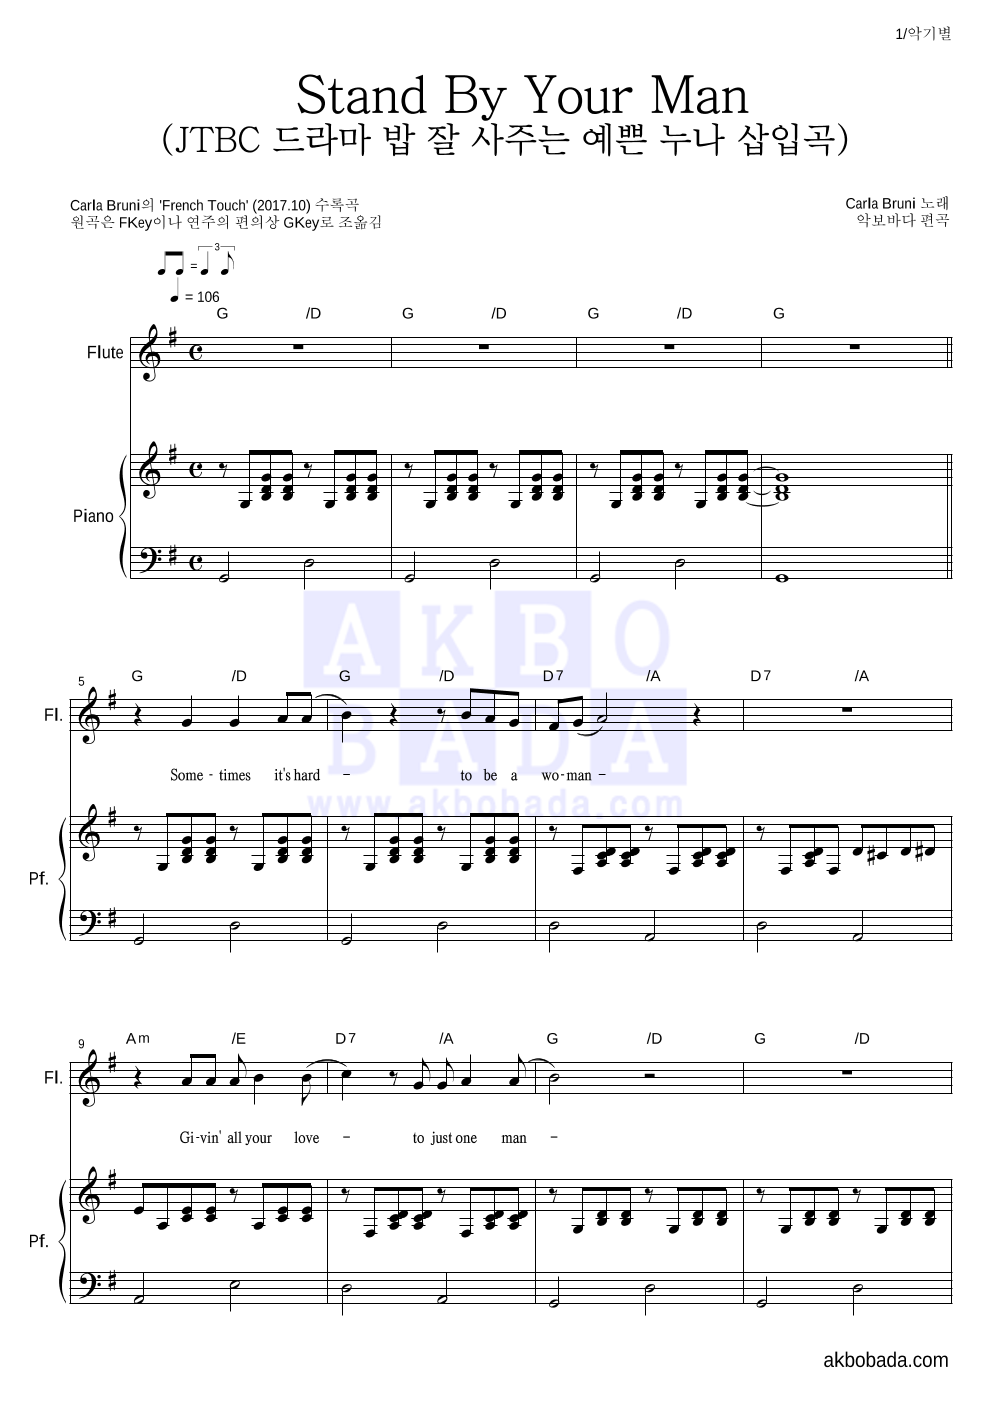 Carla Bruni - Stand By Your Man (JTBC 드라마 밥 잘 사주는 예쁜 누나 삽입곡) 플룻&피아노 악보 